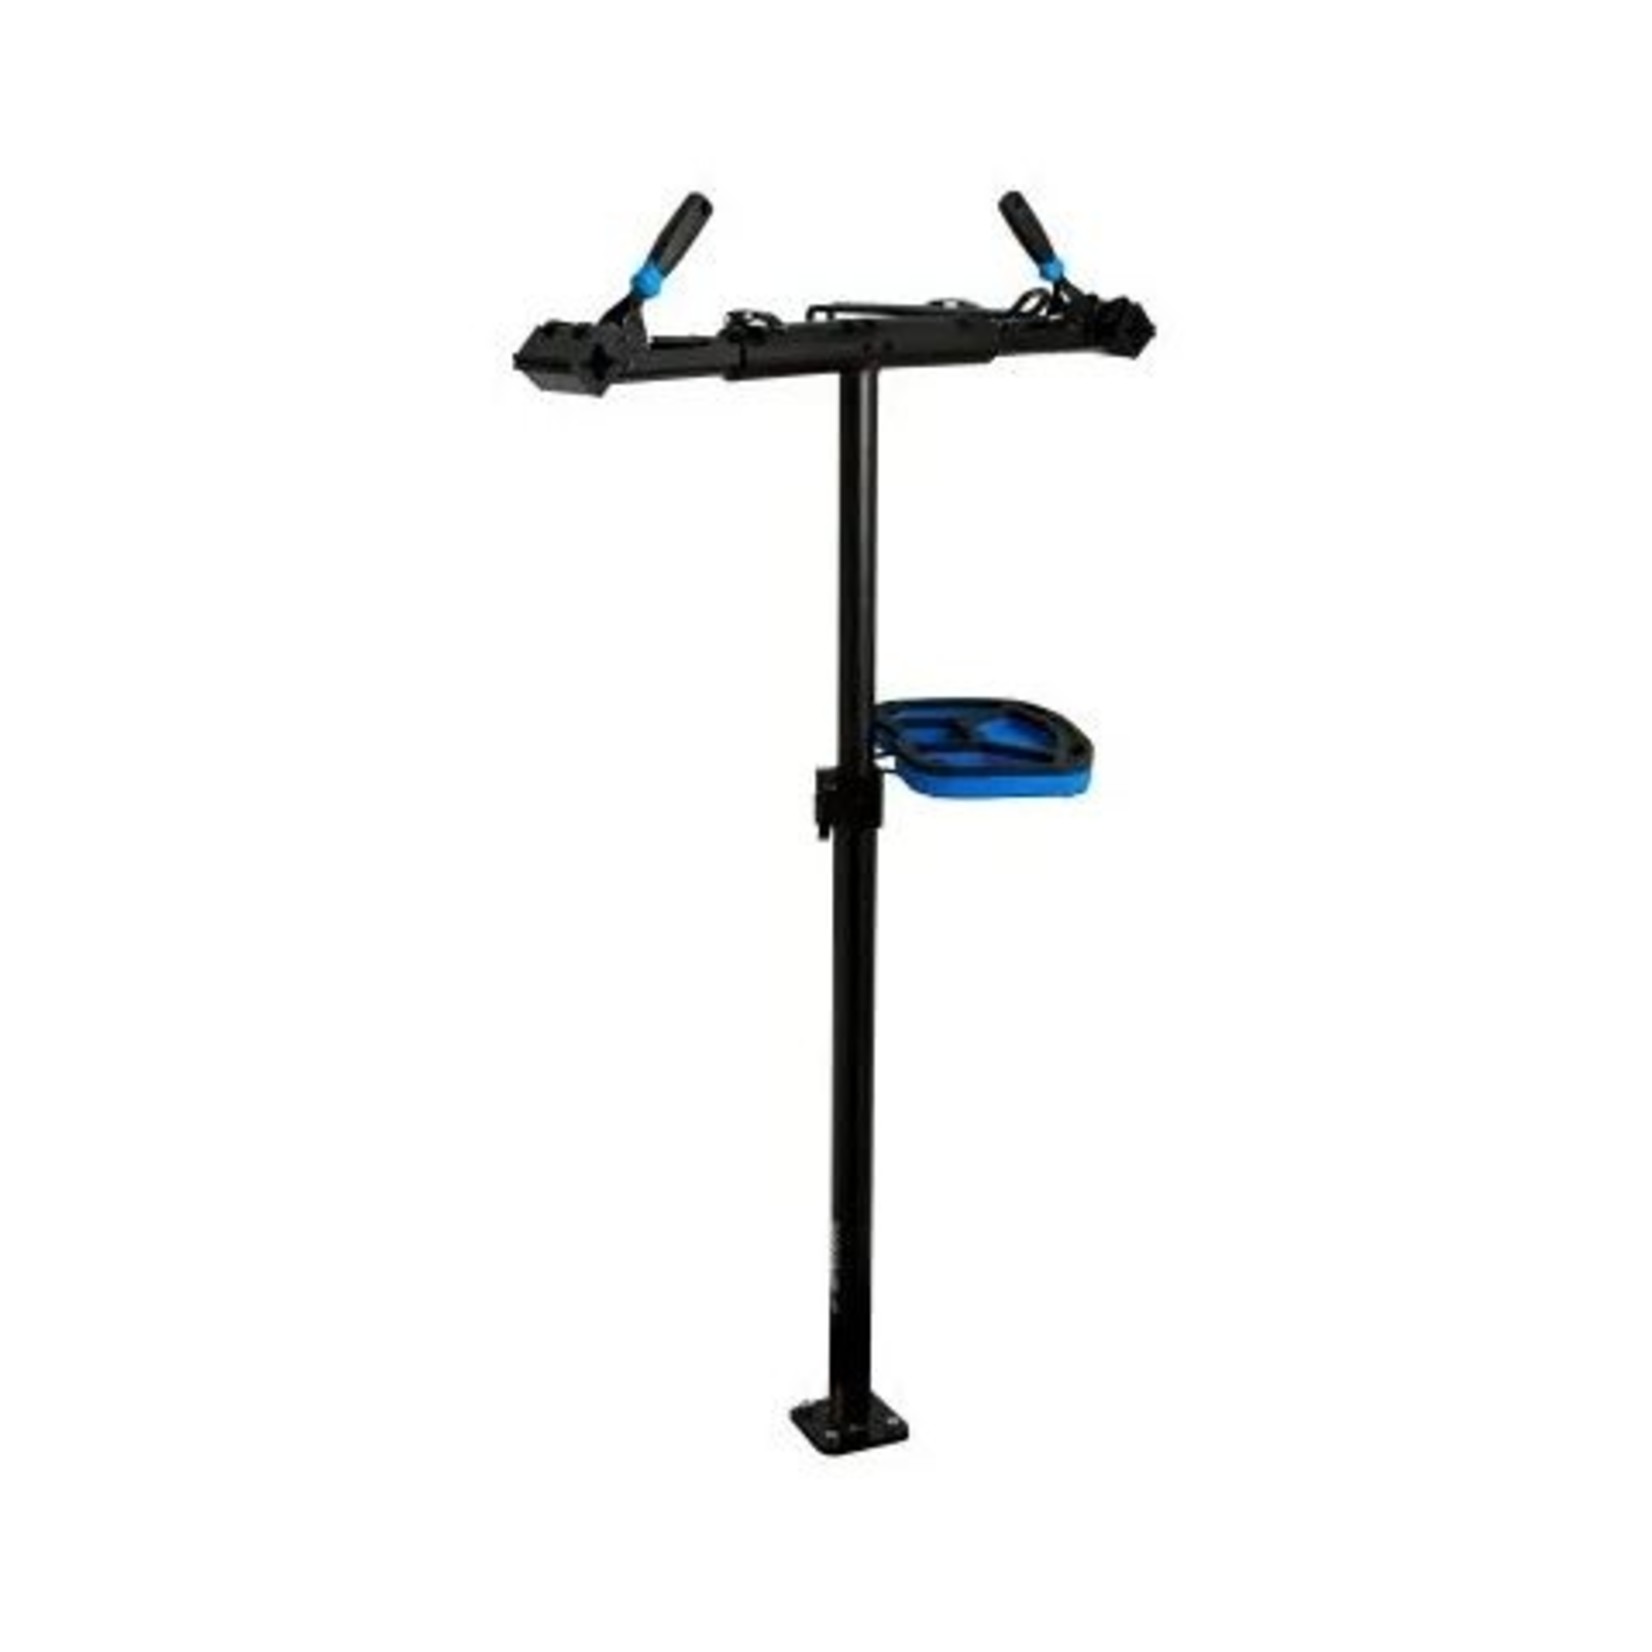 unior Unior Dual Head Workstand W/ 1 X Adj. Clamp, 1 X Sprung Clamp, Bicycle Tool